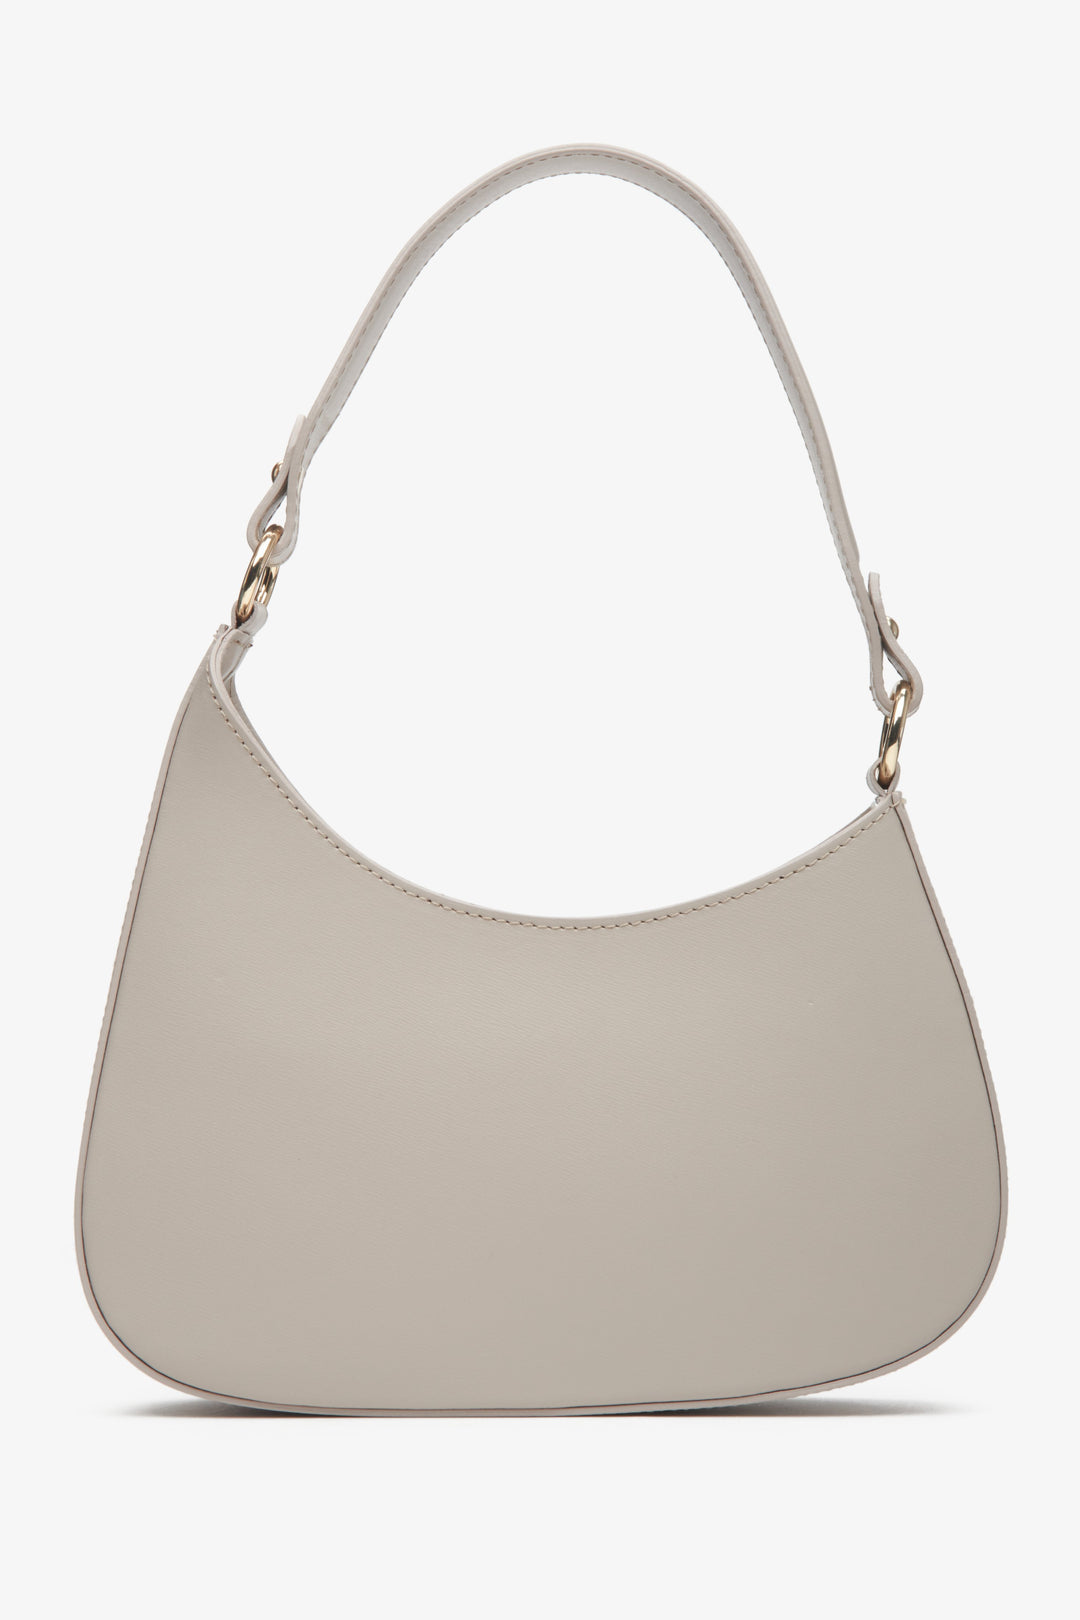 Women's beige & grey leather shoulder bag by Estrо.